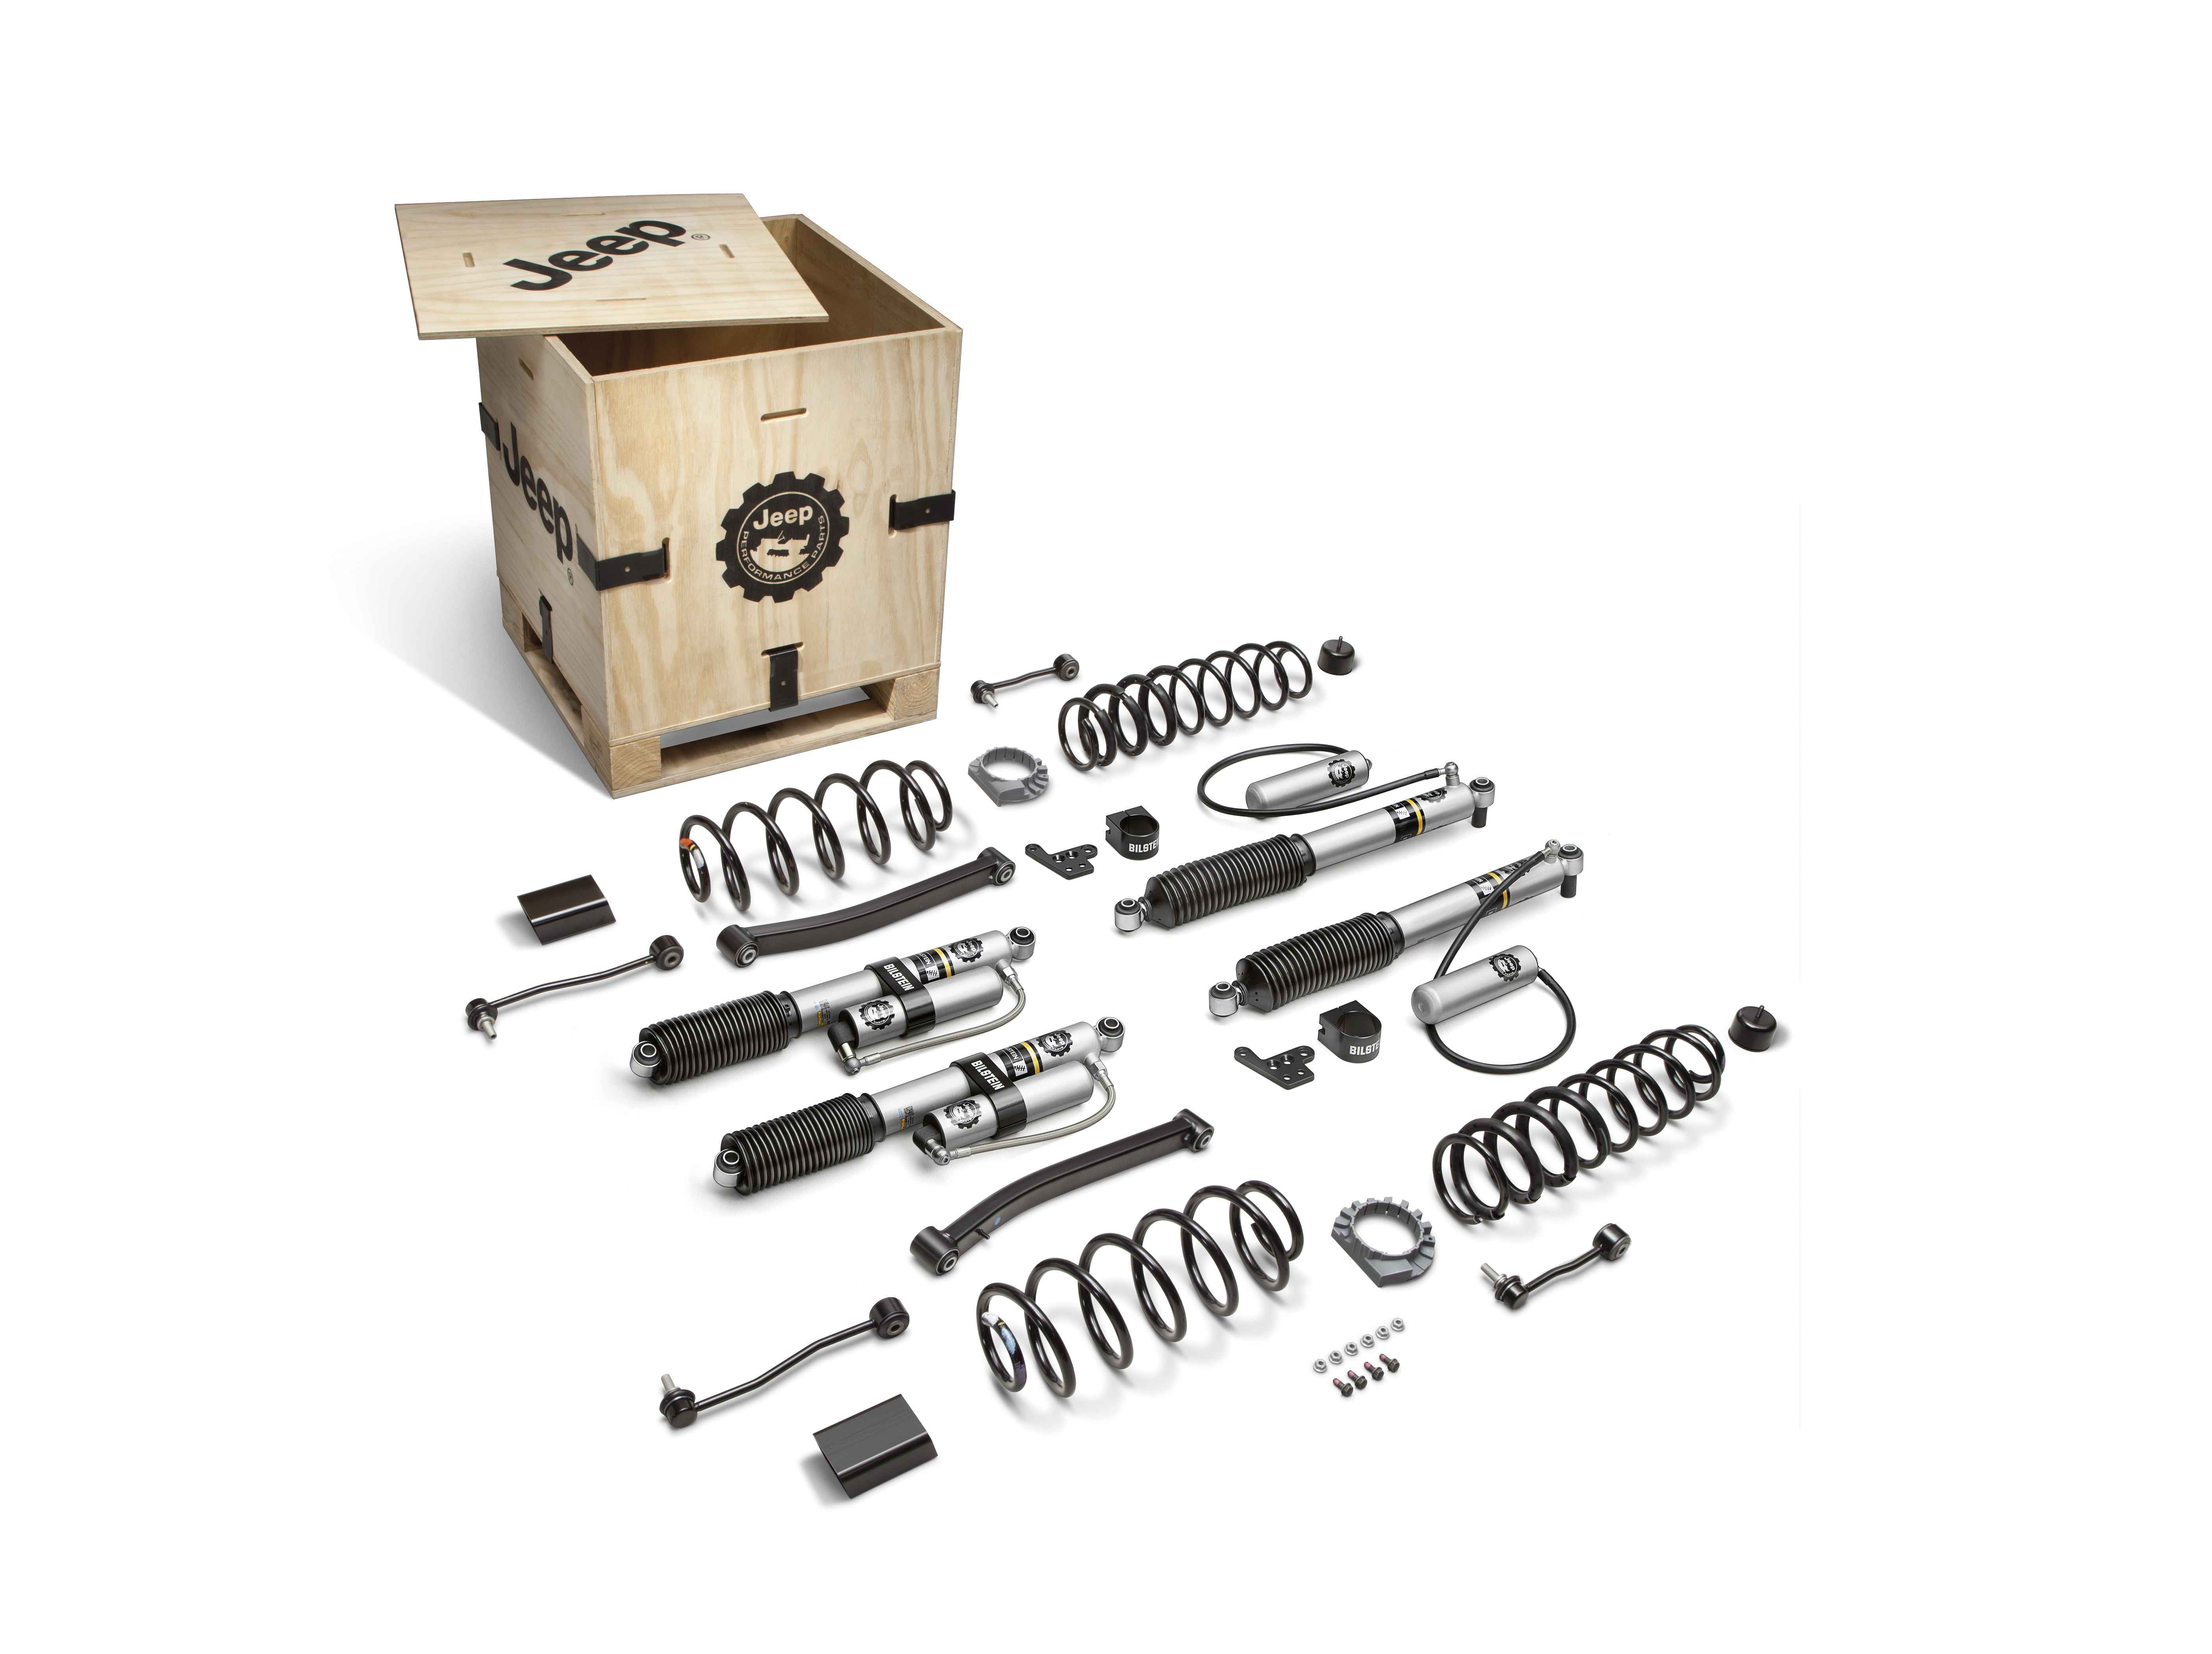 Jeep Performance Parts 2-inch Lift Kit with Bilstein Reservoir Shocks, 3.6L V6 Engine